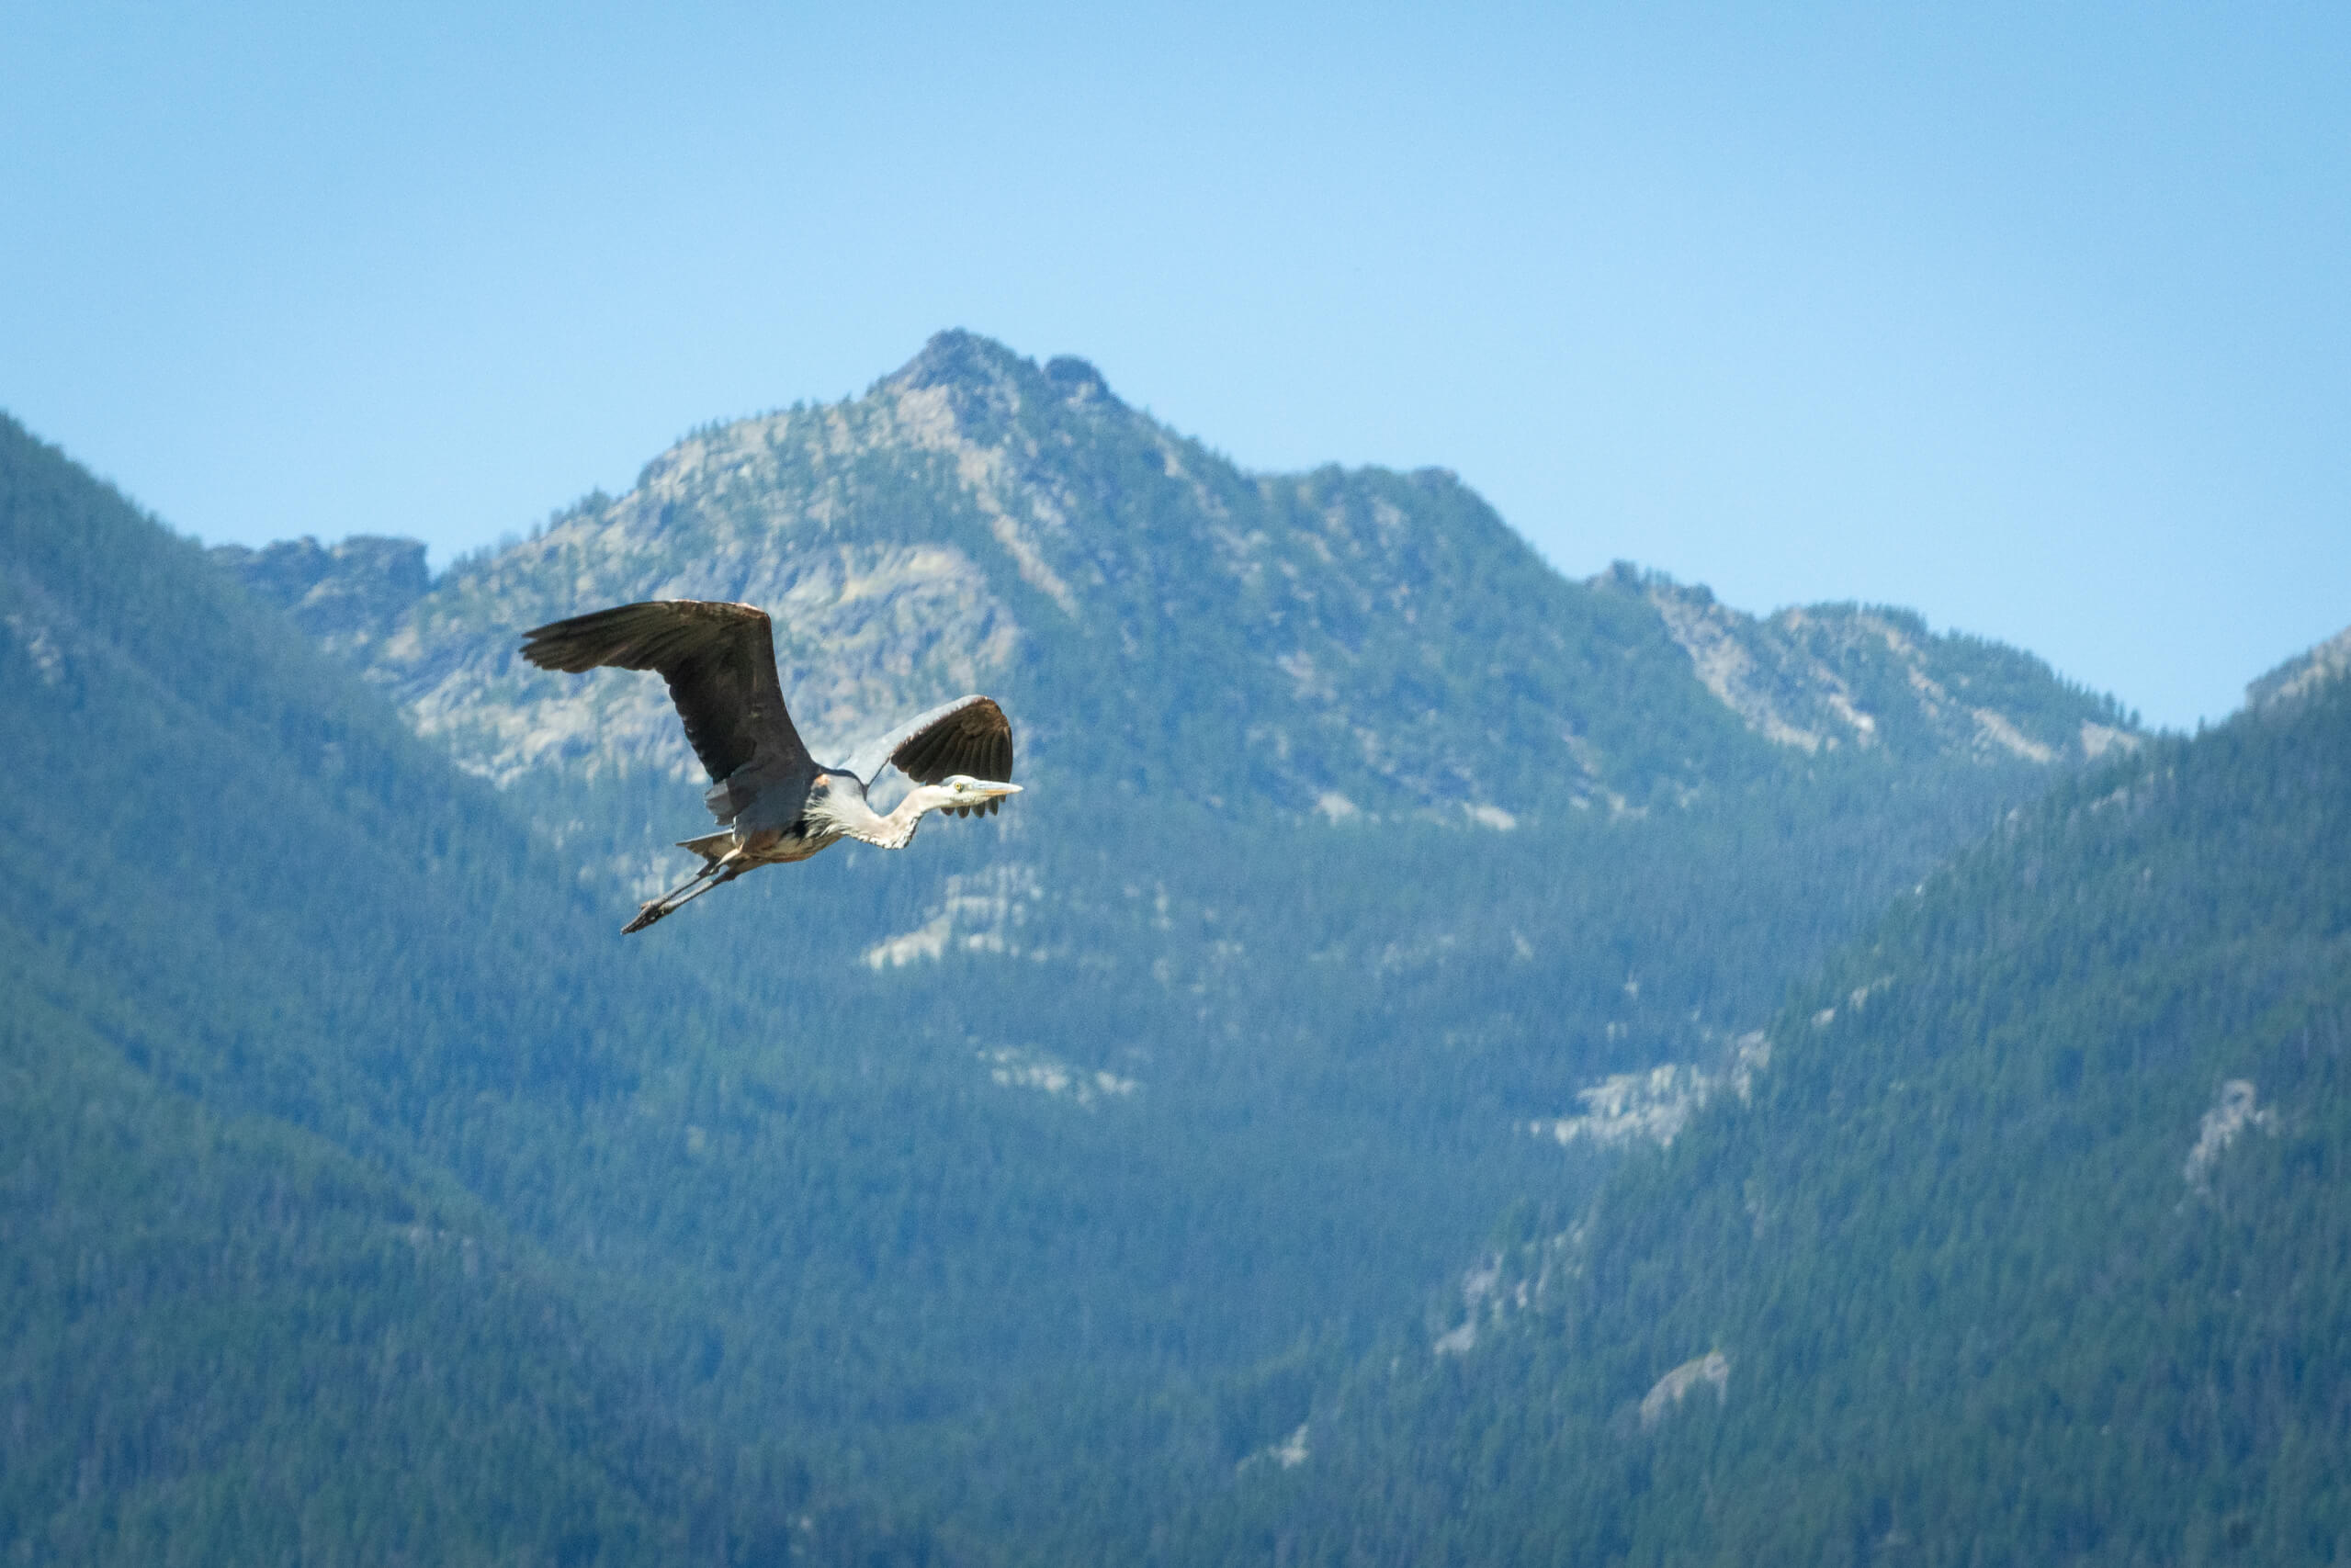 Blue heron flying across mountain scene